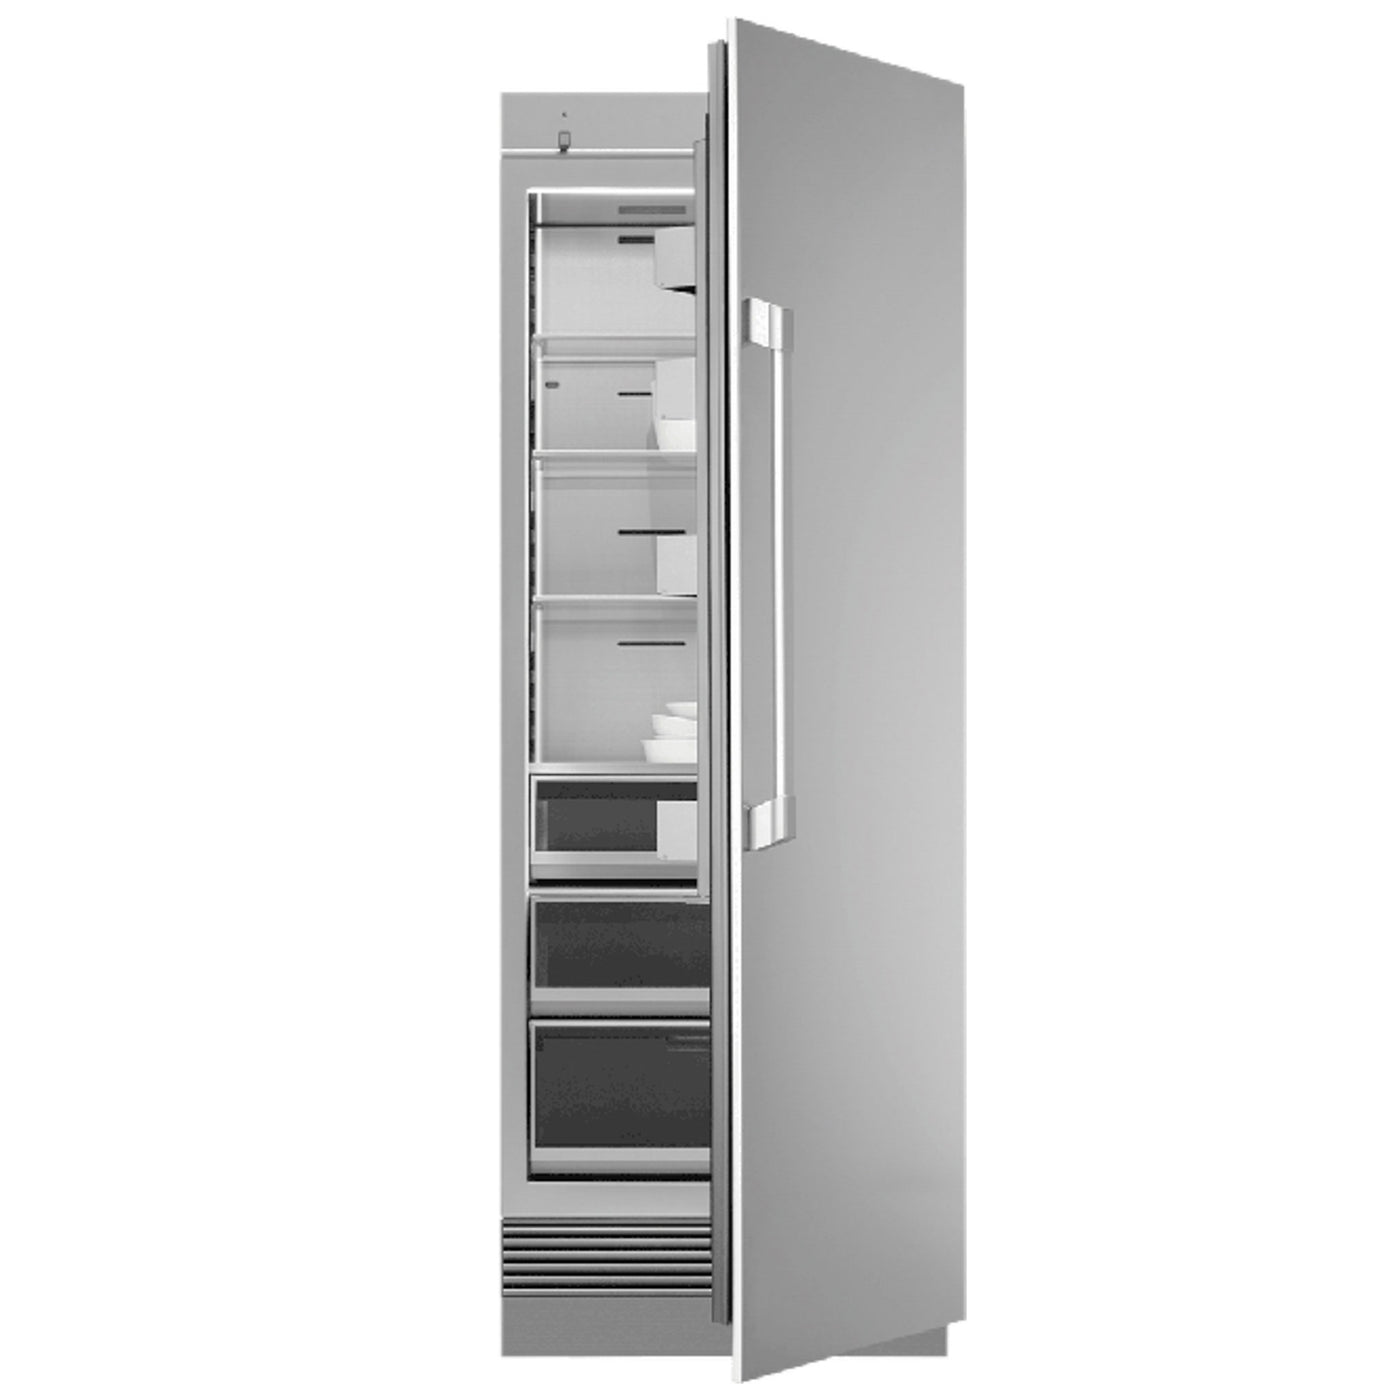 Dacor-Refrigerator-DRR30980RAP